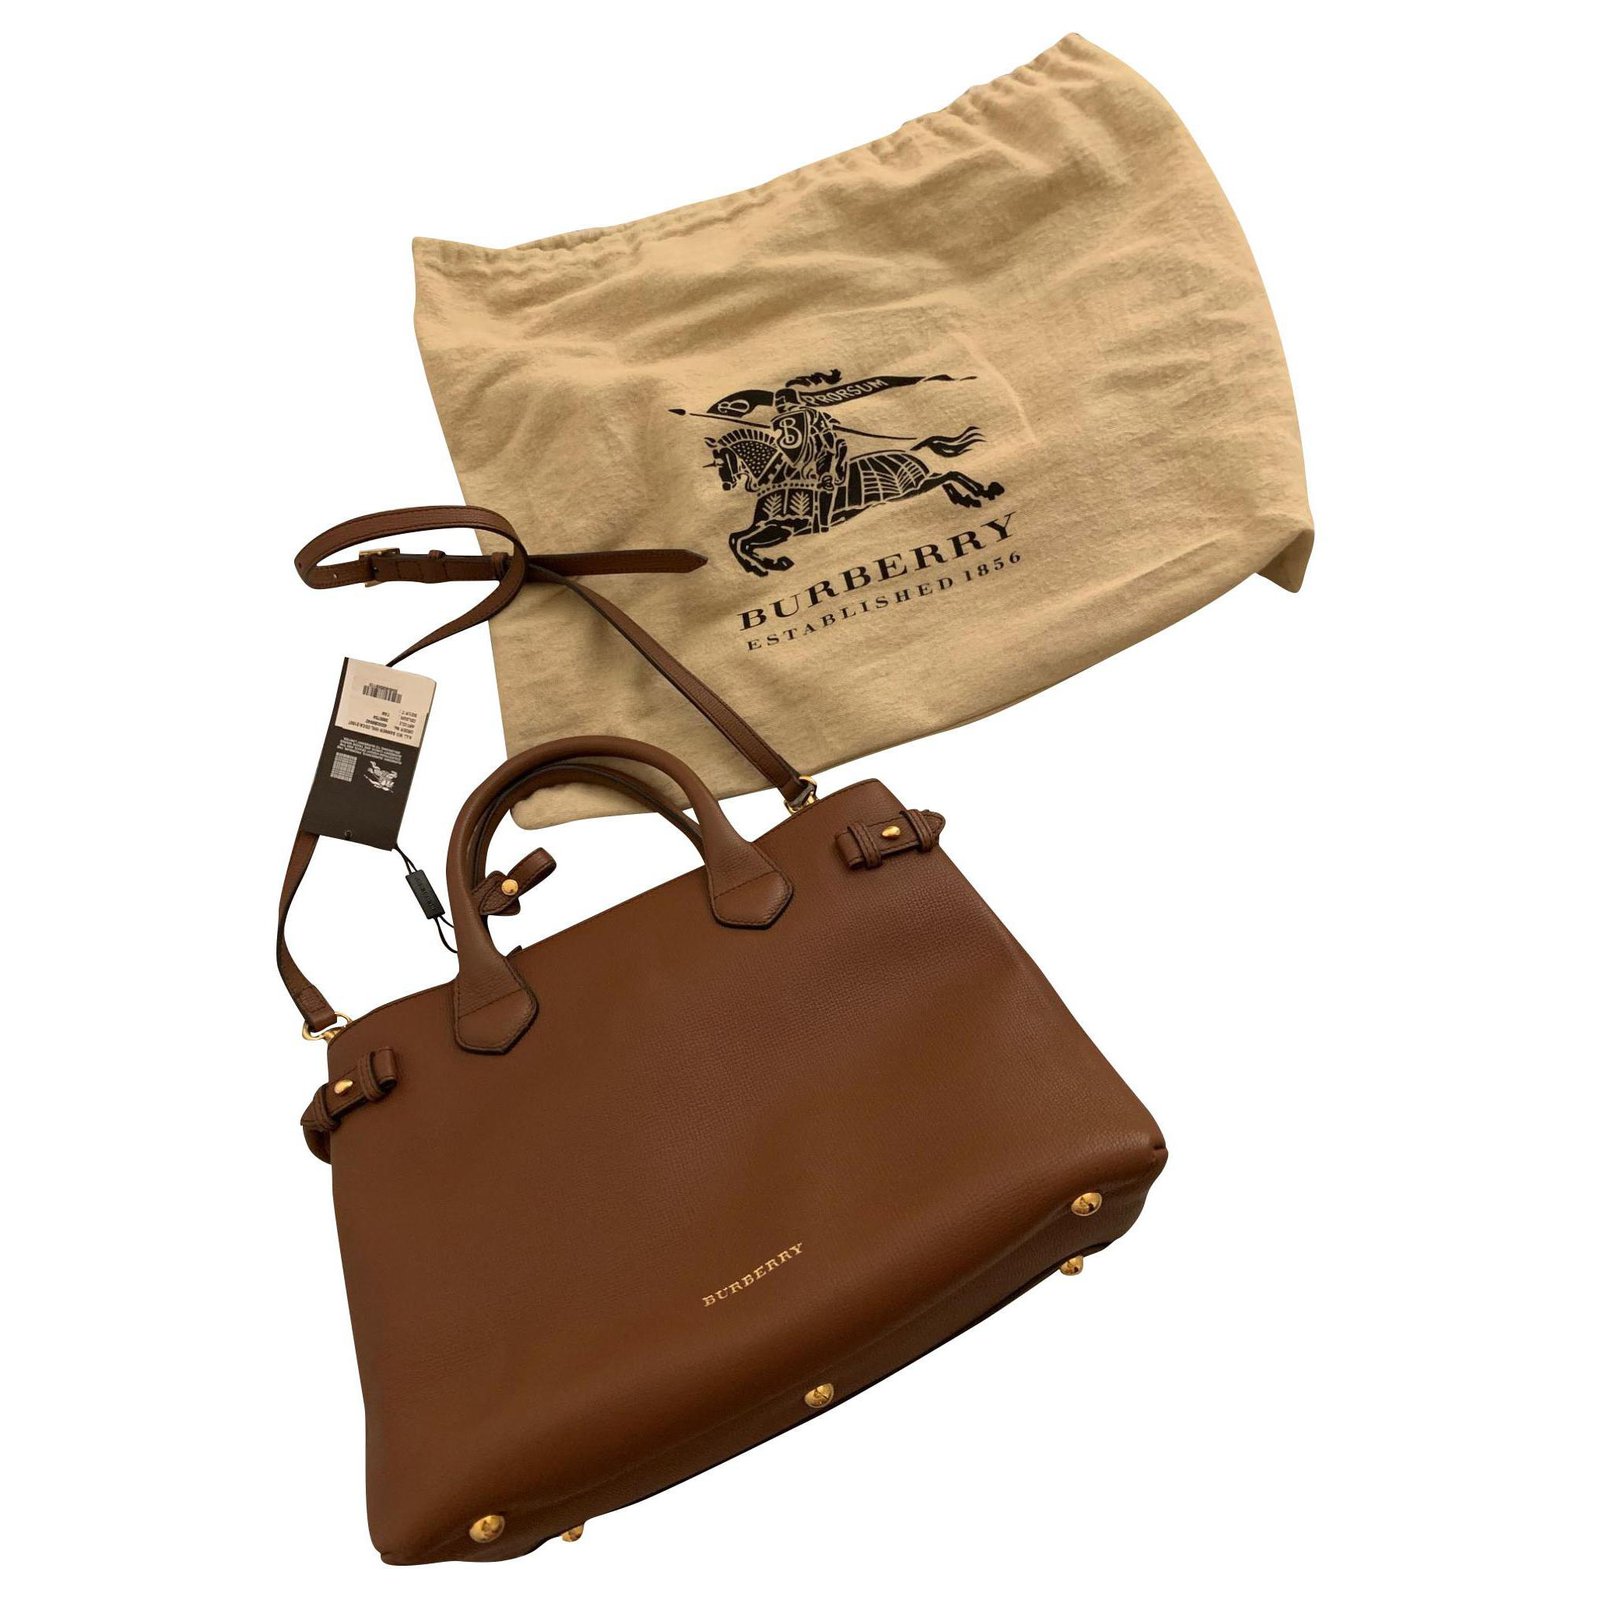 burberry banner medium leather satchel